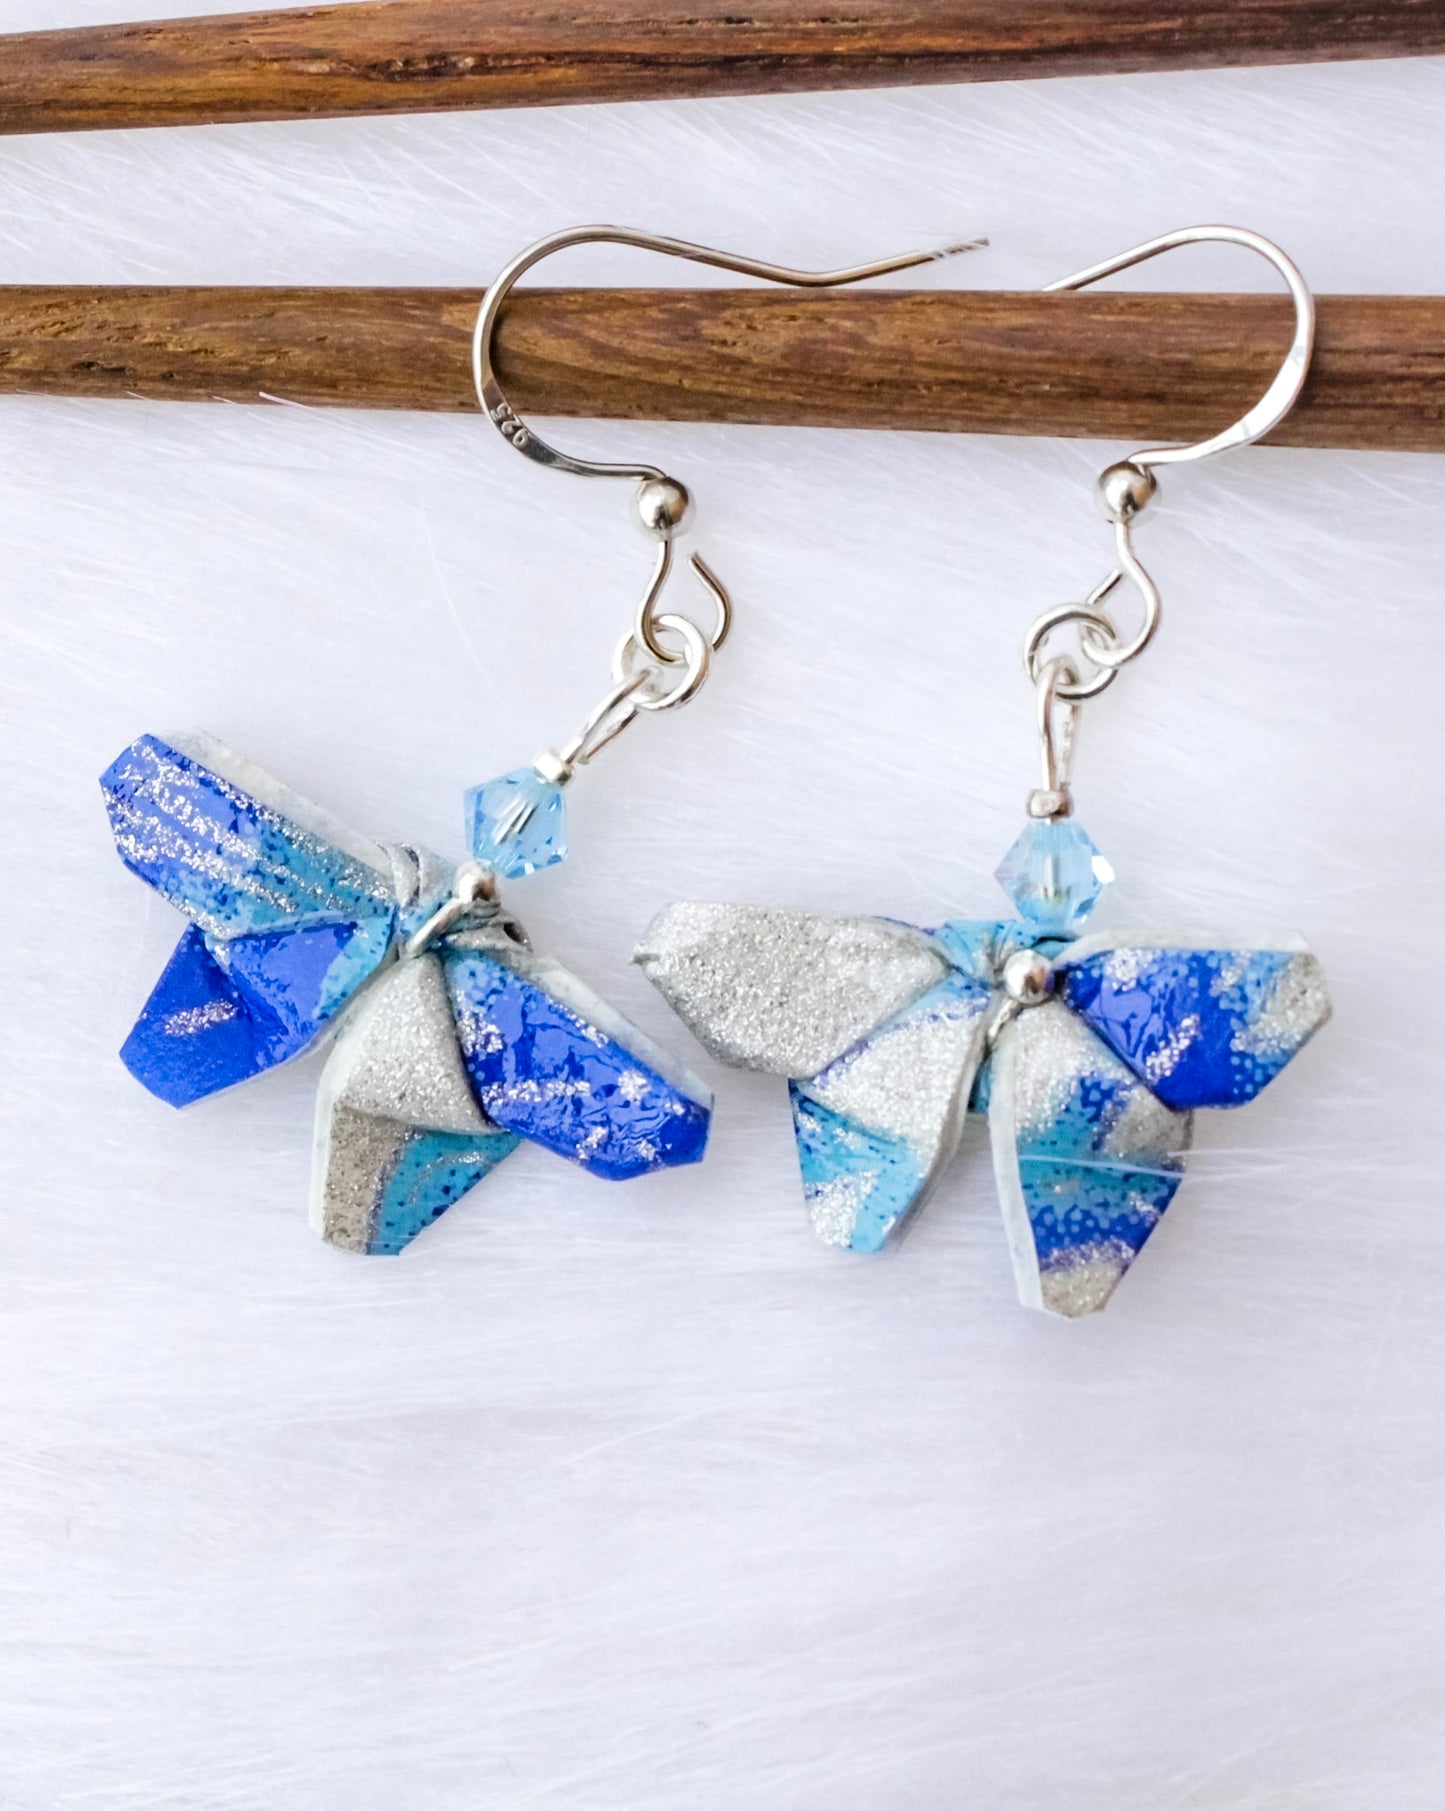 Origami Earrings - Butterfly Swarovski Crystals